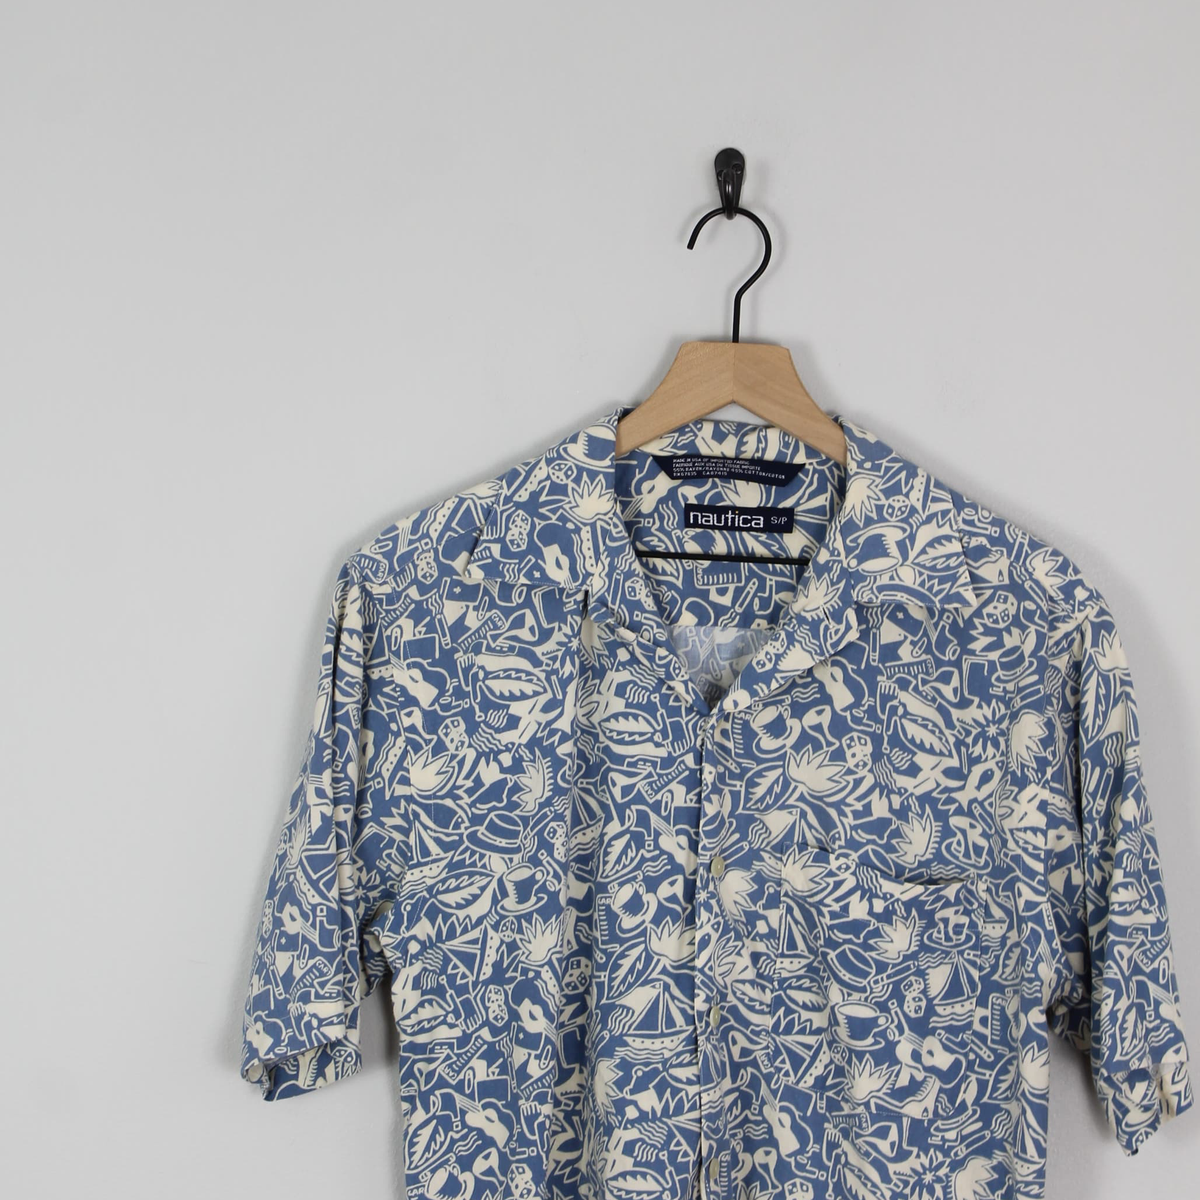 Women's Vintage Hawaiian Shirt in Size Small. Basic 